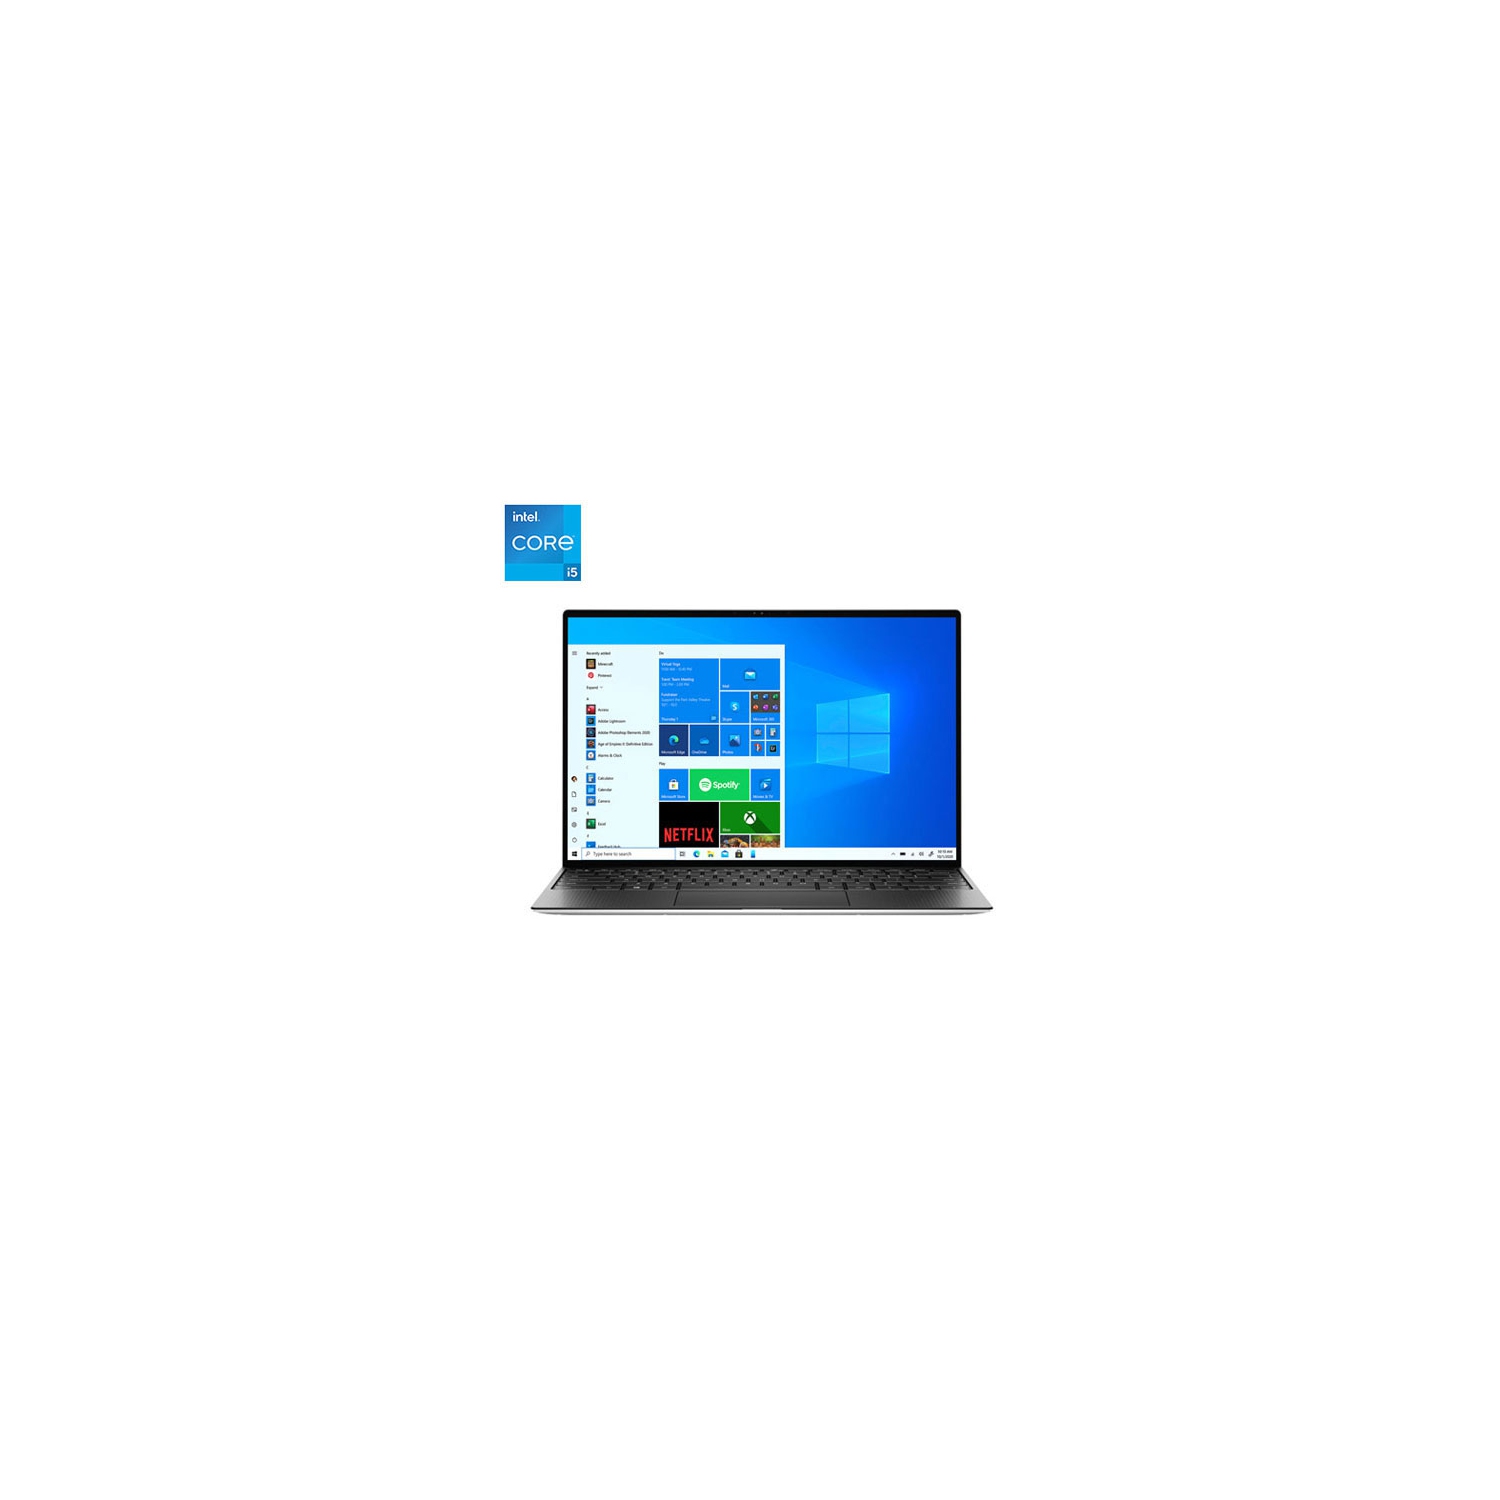 Dell XPS 13.4" Laptop - Platinum Silver (Intel Core i5-1135G7/512GB SSD/8GB RAM/Windows 10) - Open Box